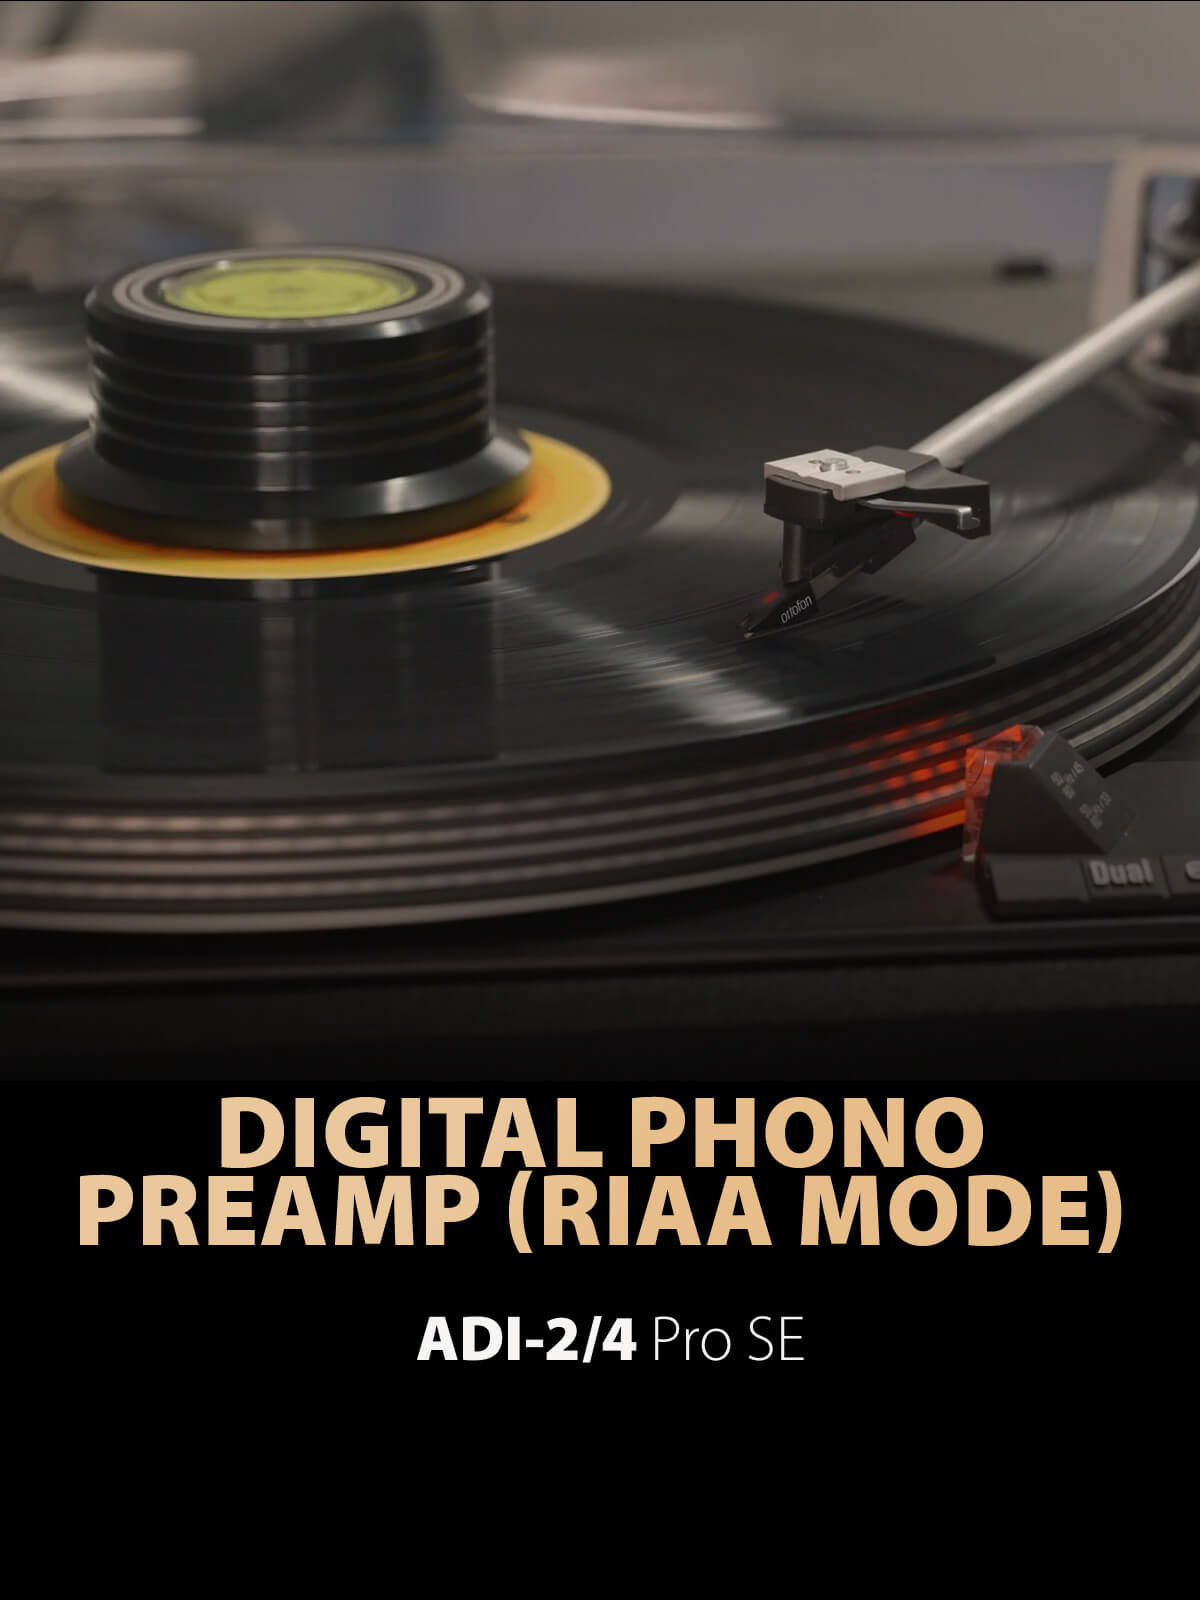 Digital Phono Preamp (RIAA Mode) erklärt